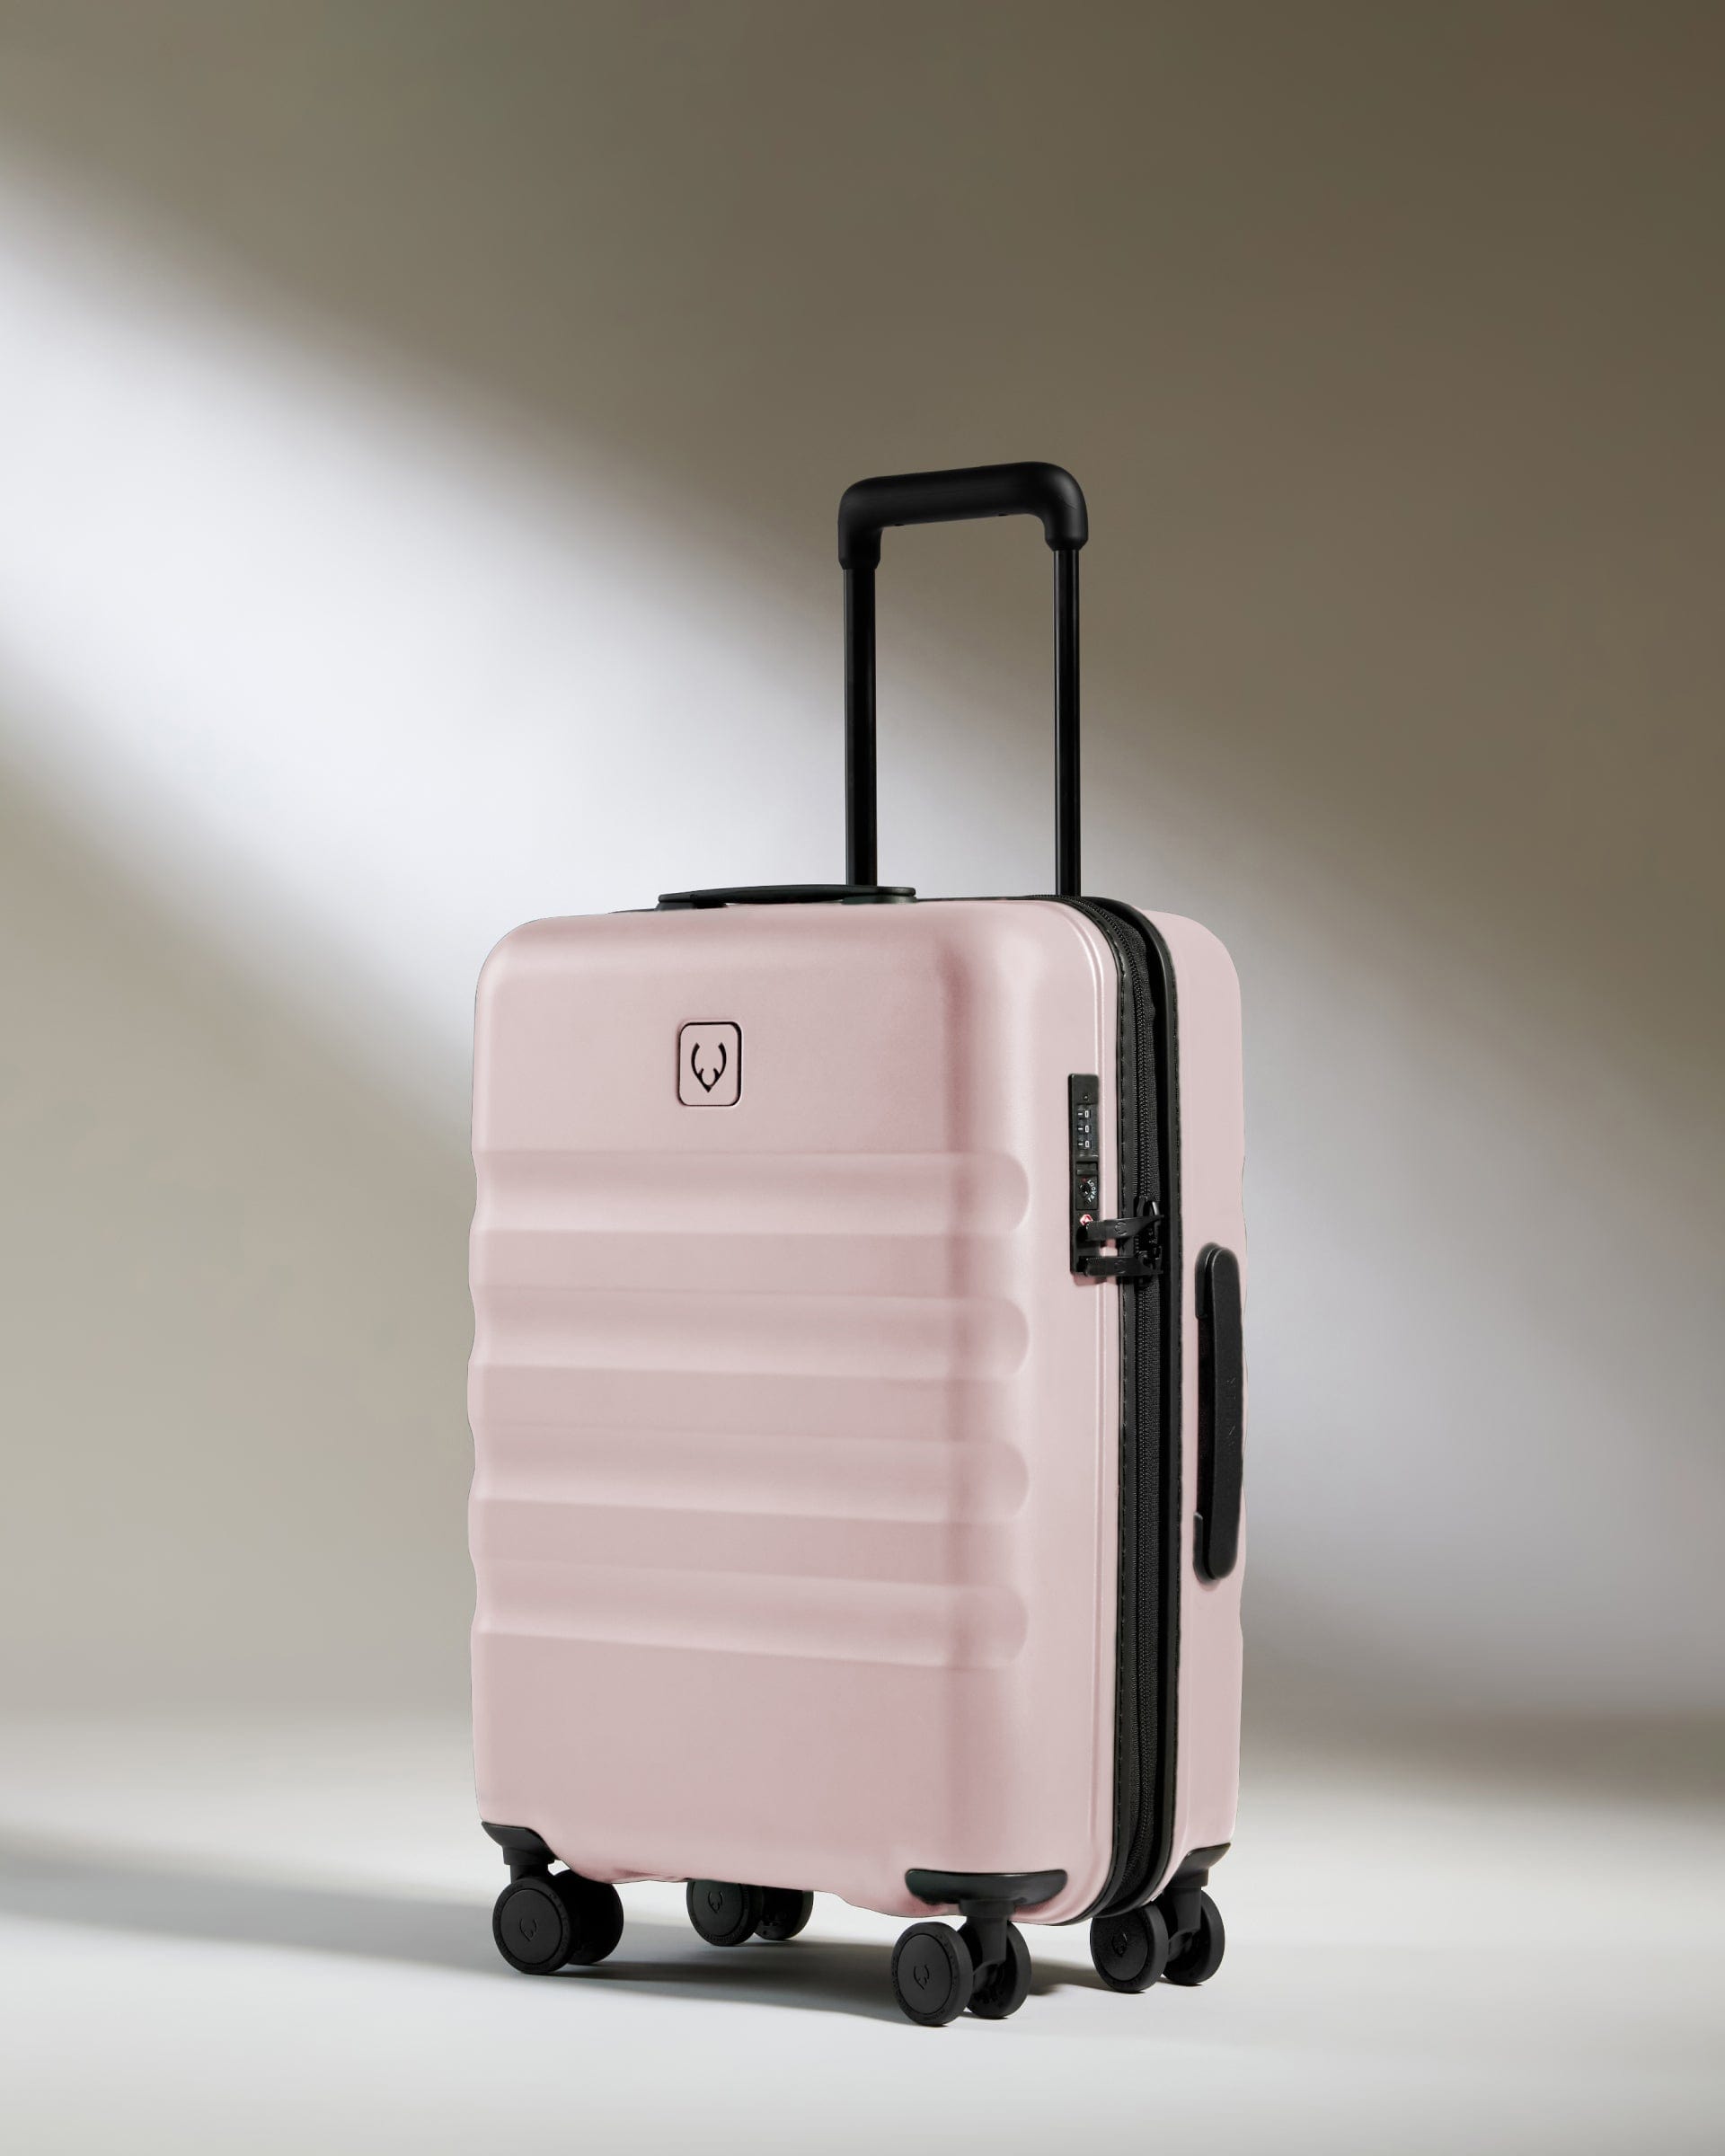 View Antler Icon Stripe Cabin Suitcase In Moorland Pink Size 20cm x 55cm x 40cm information